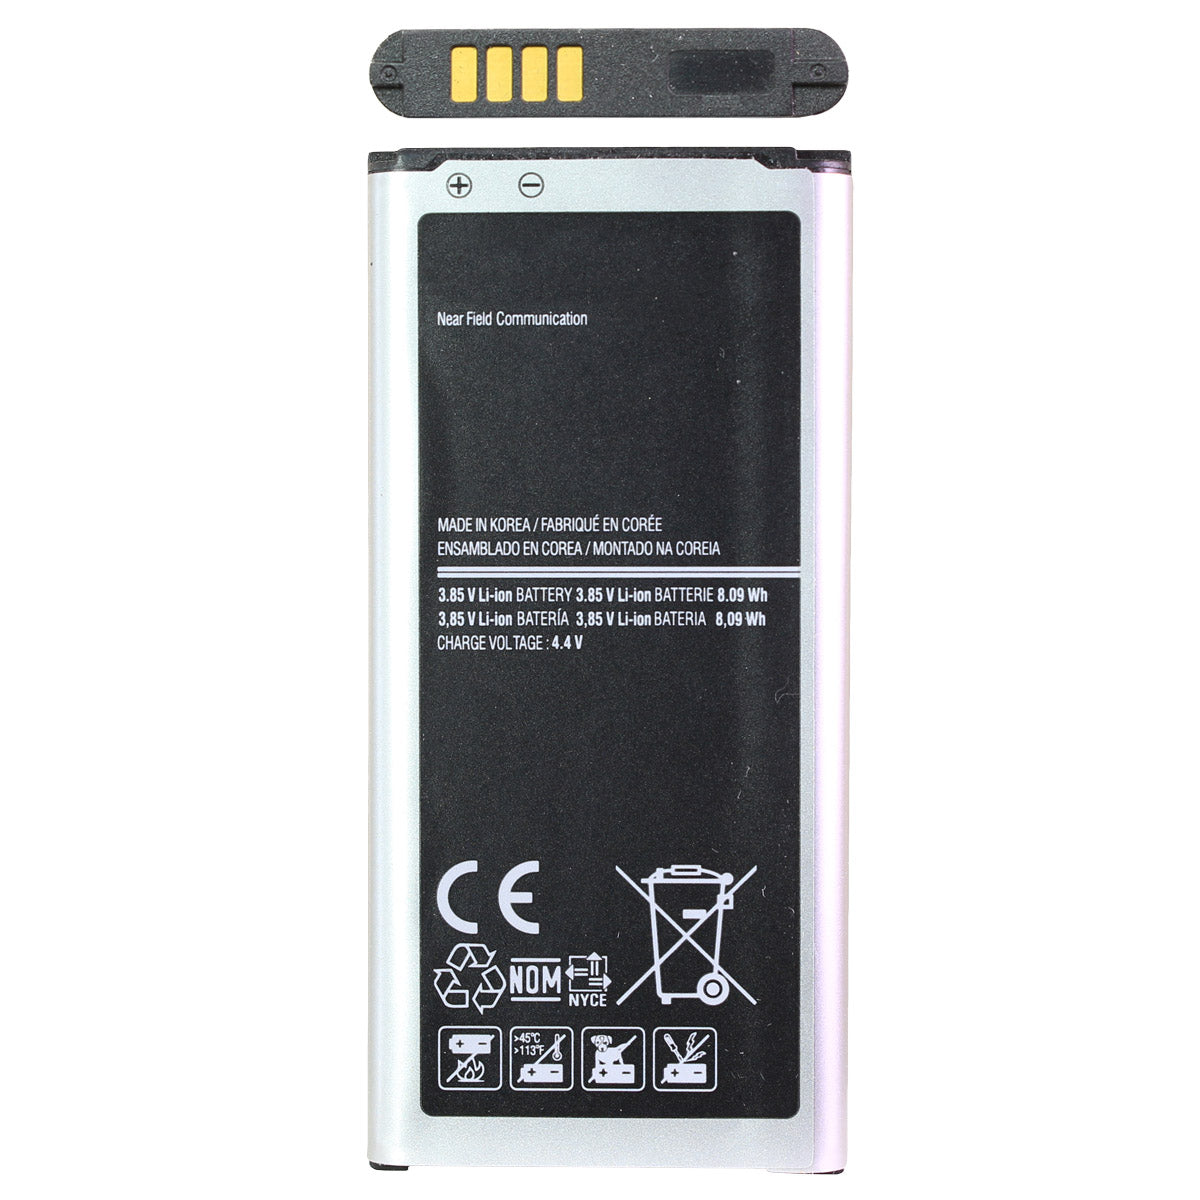 Samsung Galaxy s5 mini Akku Batterie Ersatzakku